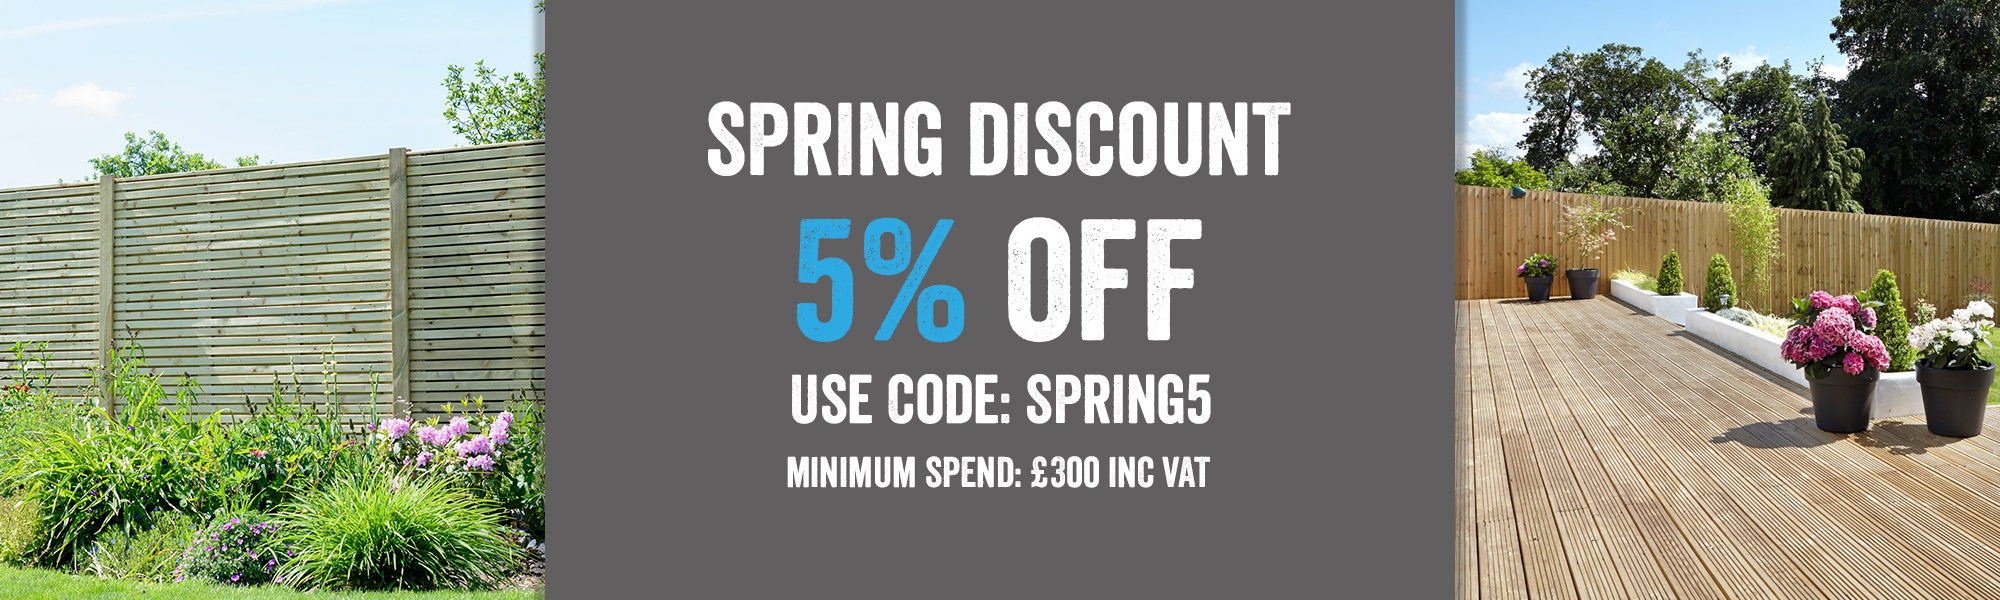 Spring Discount - SPRING5